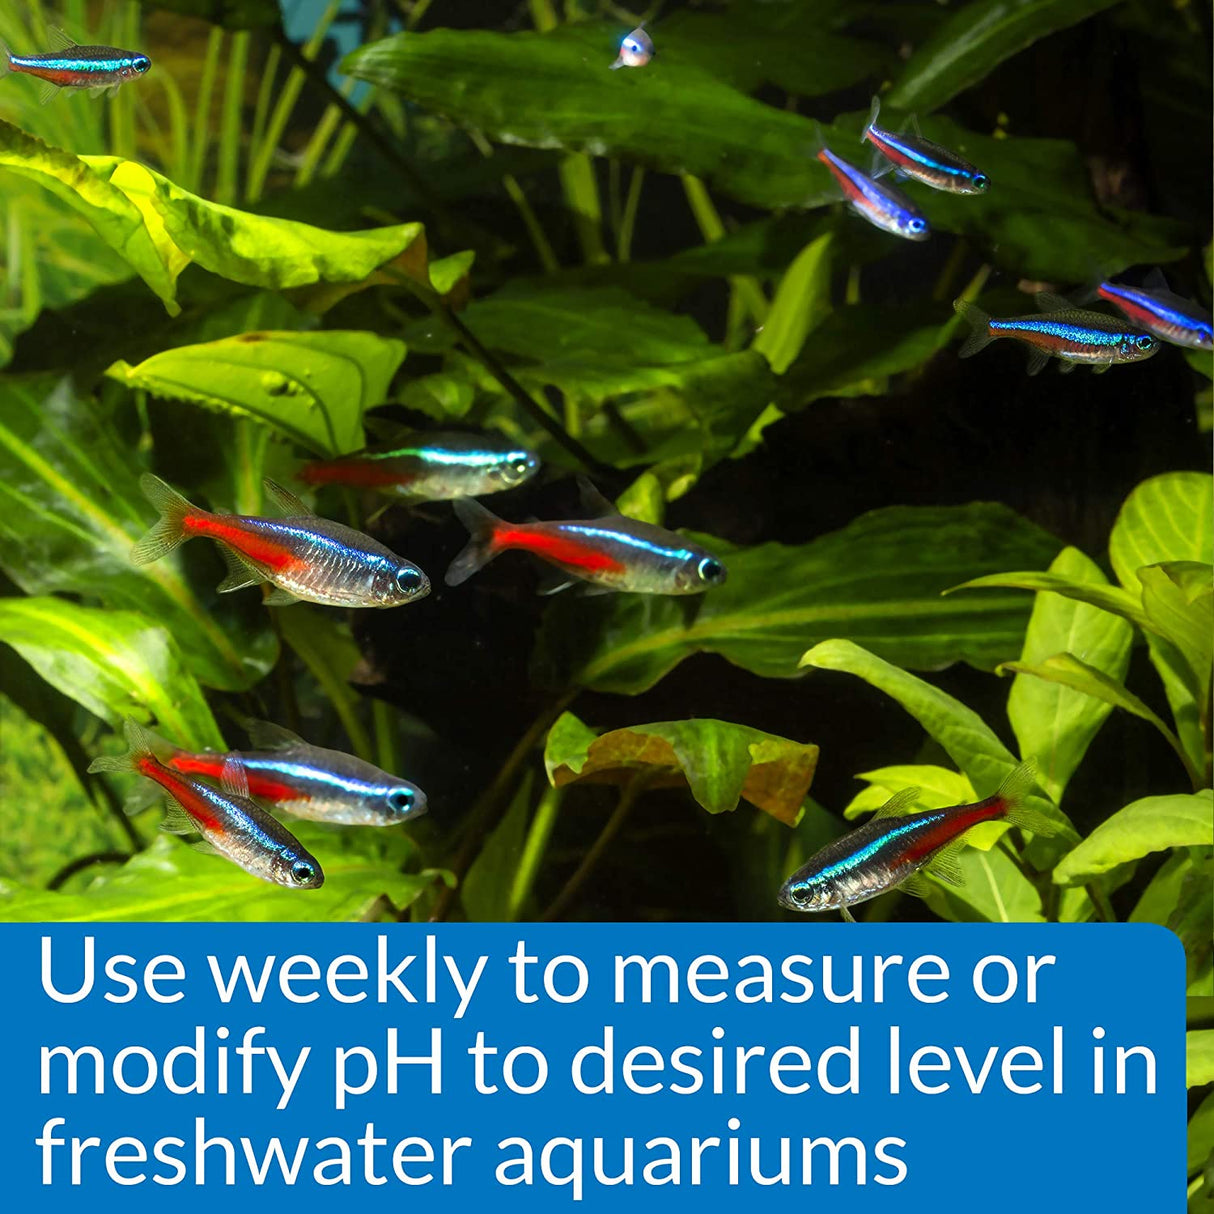 API pH Test and Adjuster Kit for Freshwater Aquariums - PetMountain.com